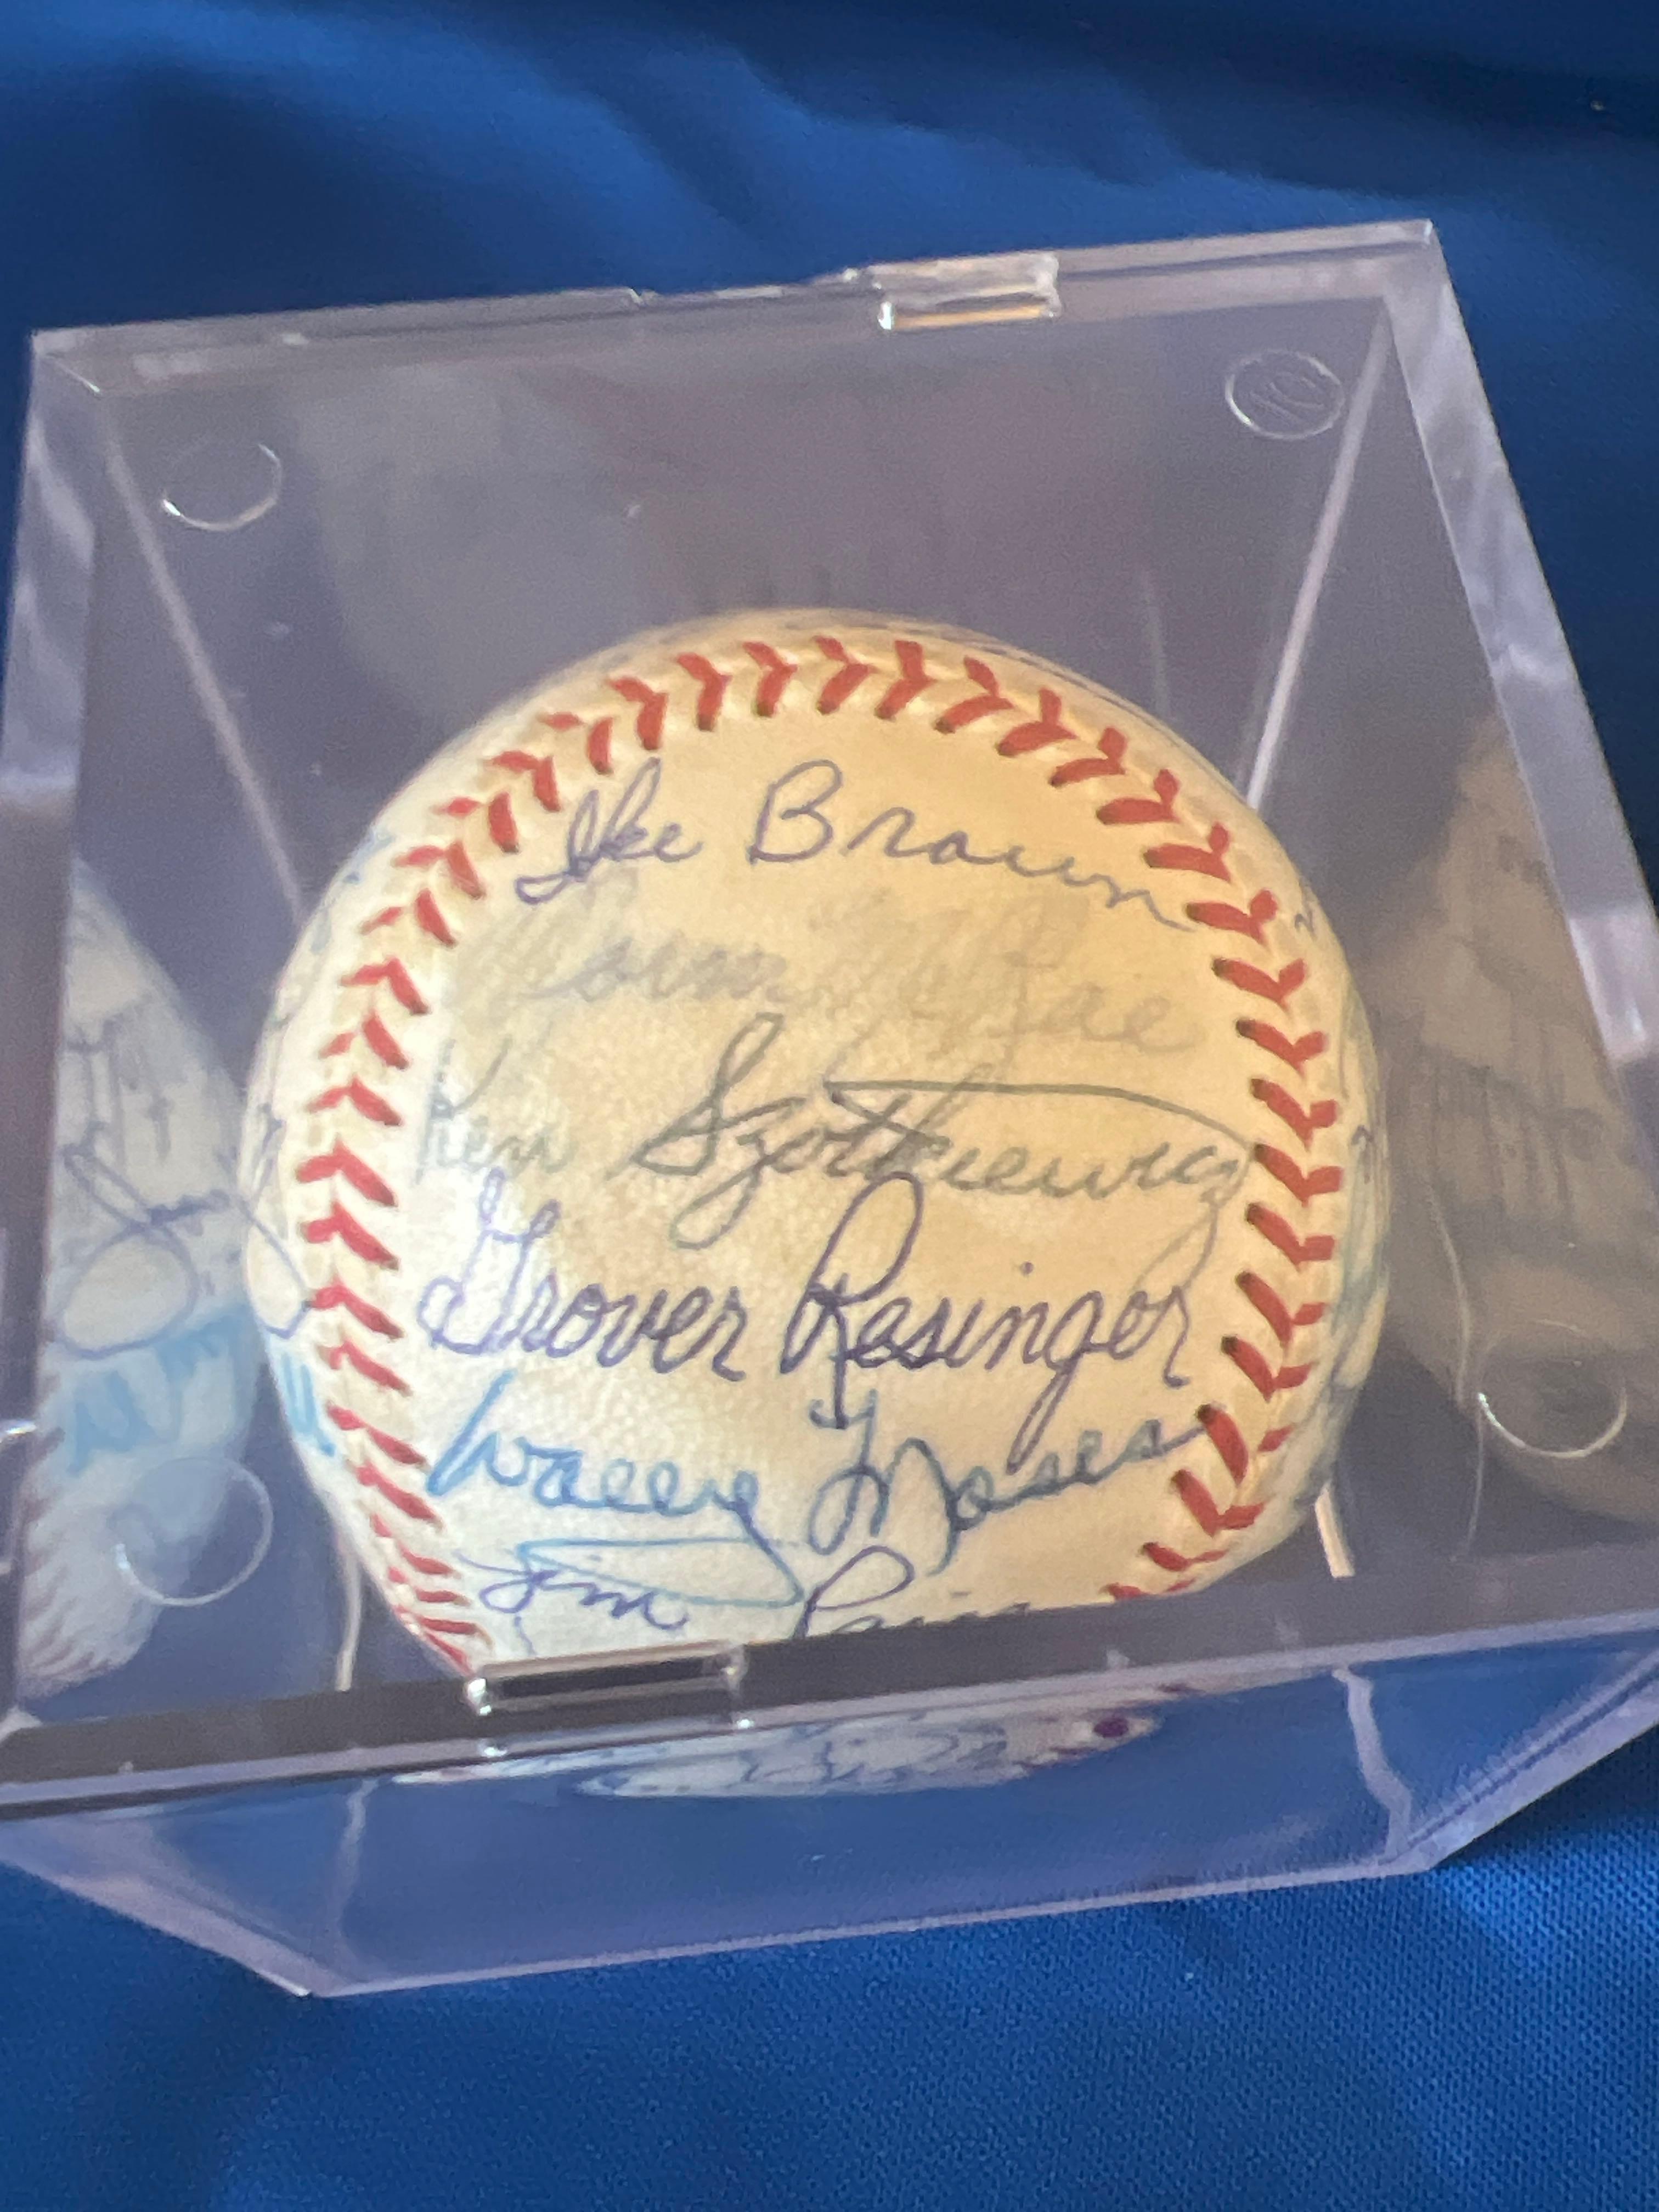 Detroit Tigers 1-26-71 Autographed Baseball